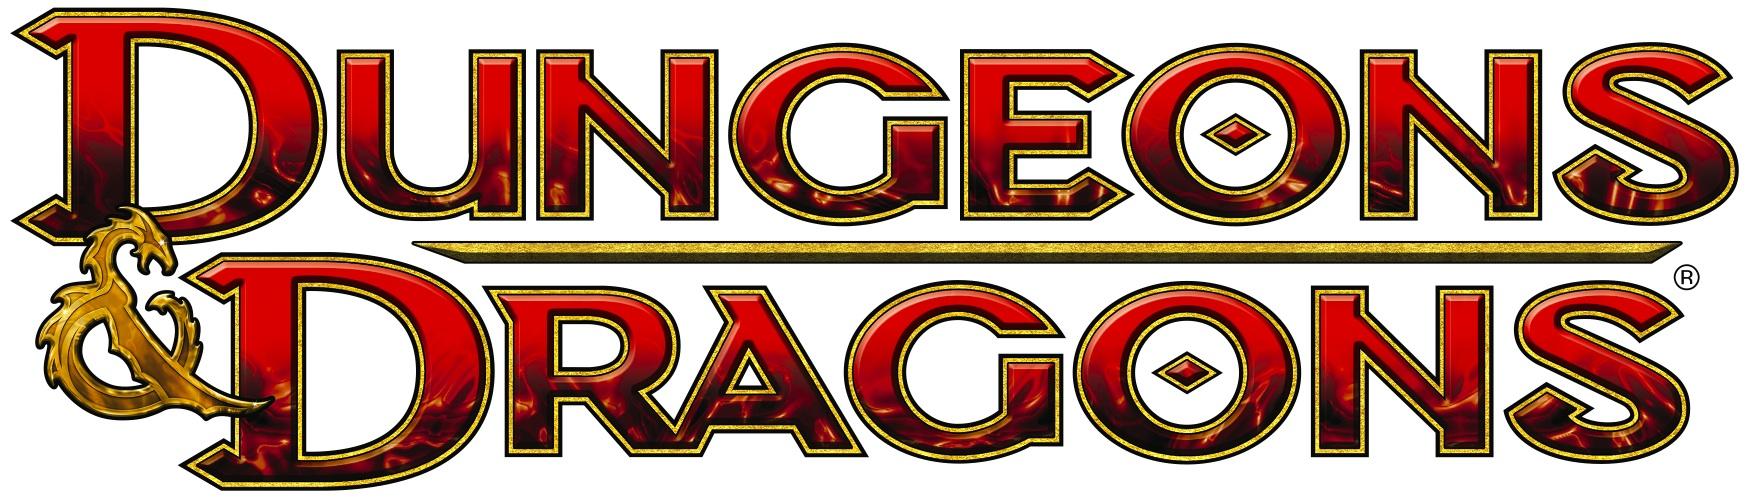 Dungeons & Dragons | Logopedia | Fandom powered by Wikia